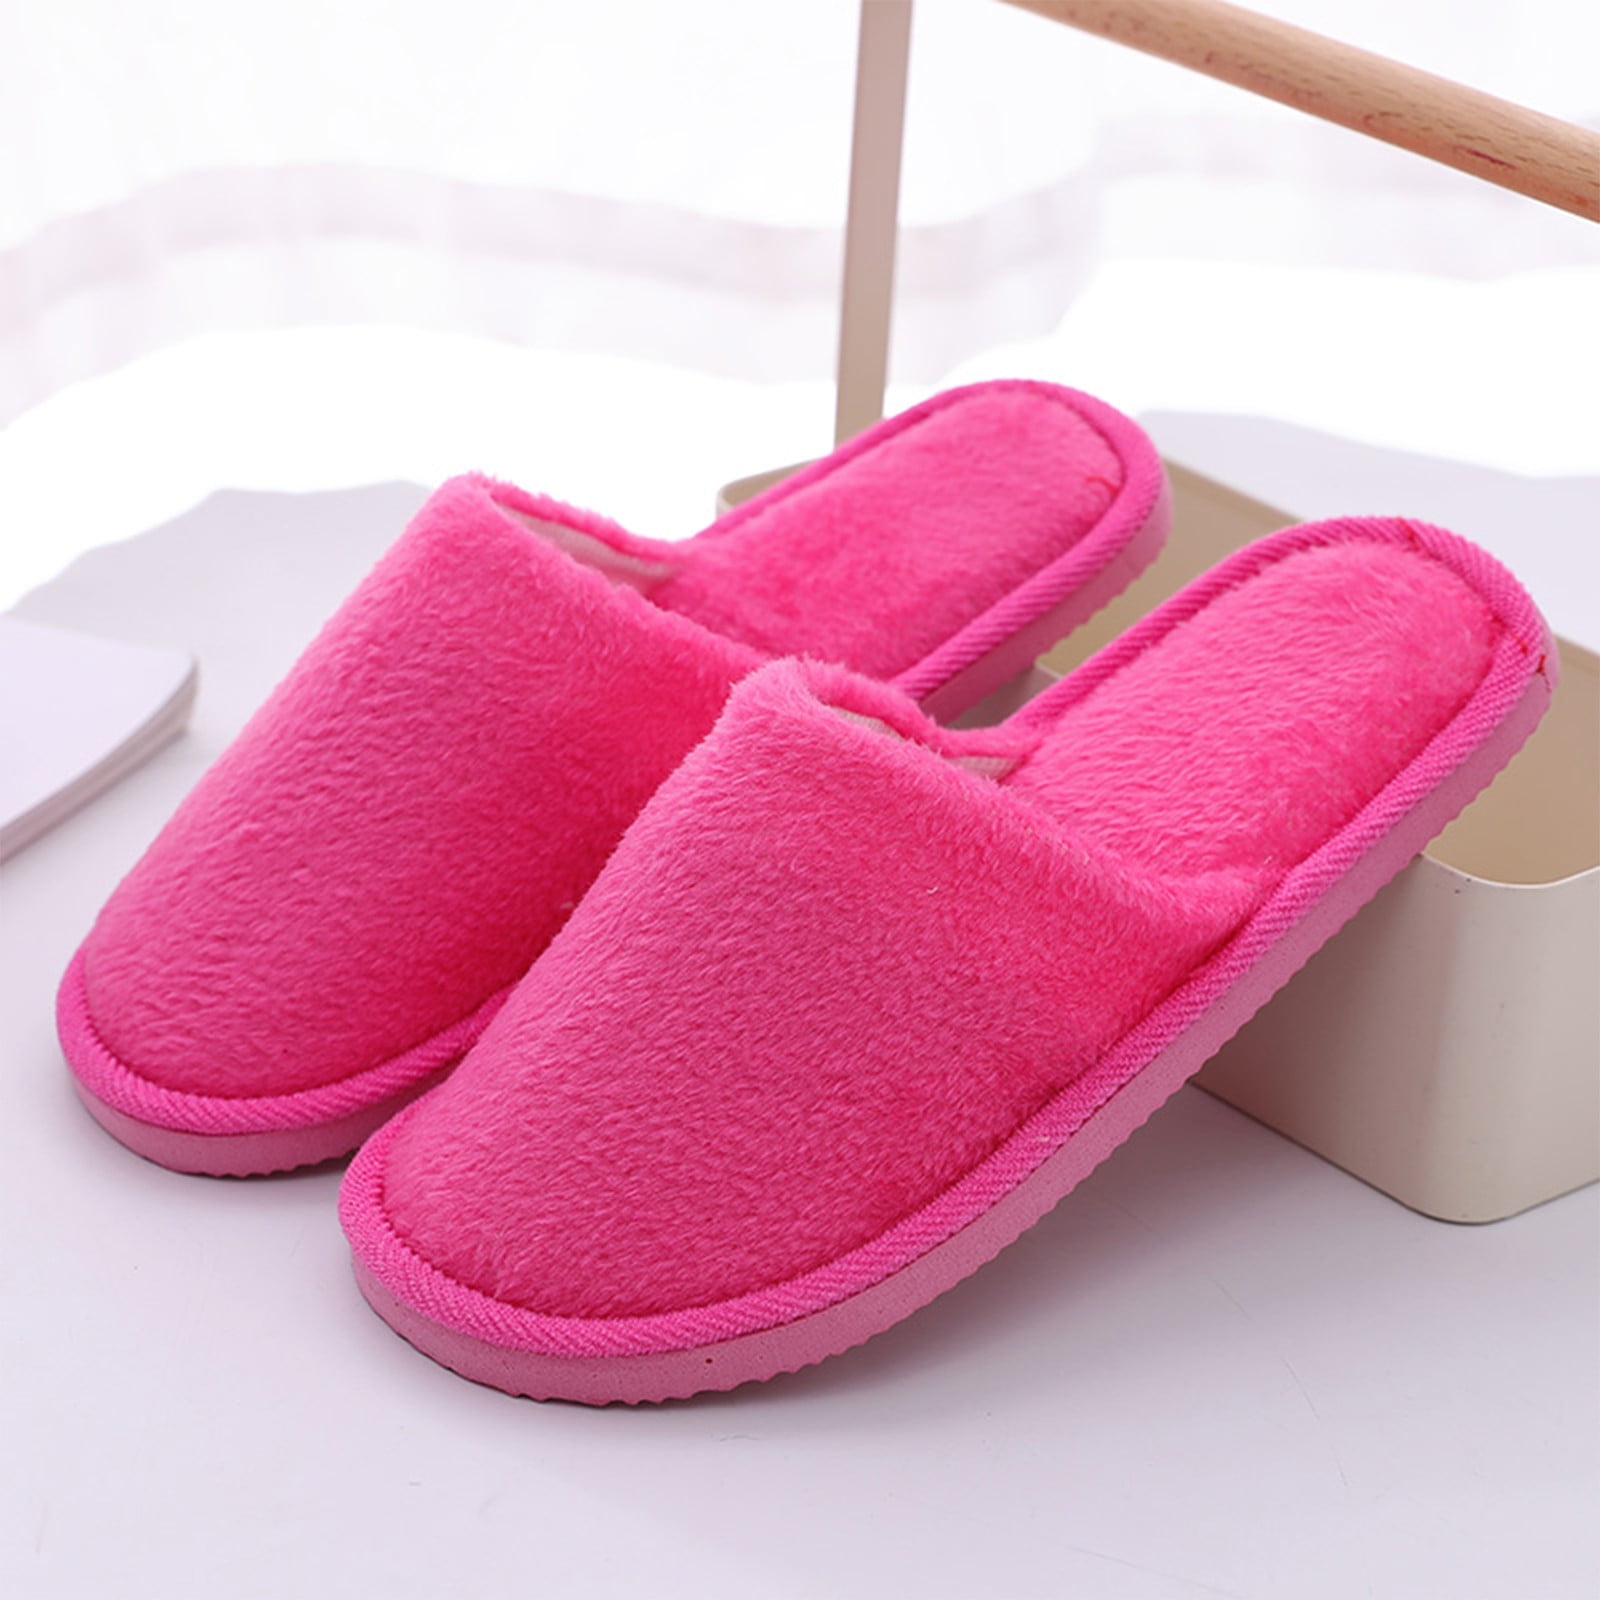 XINKAIRUN Women'S Slipper Shoes for Unisex Women Slippers Chuzzle Cotton Warm Home Slippers Hot Pink (Buy 2 Get - Walmart.com